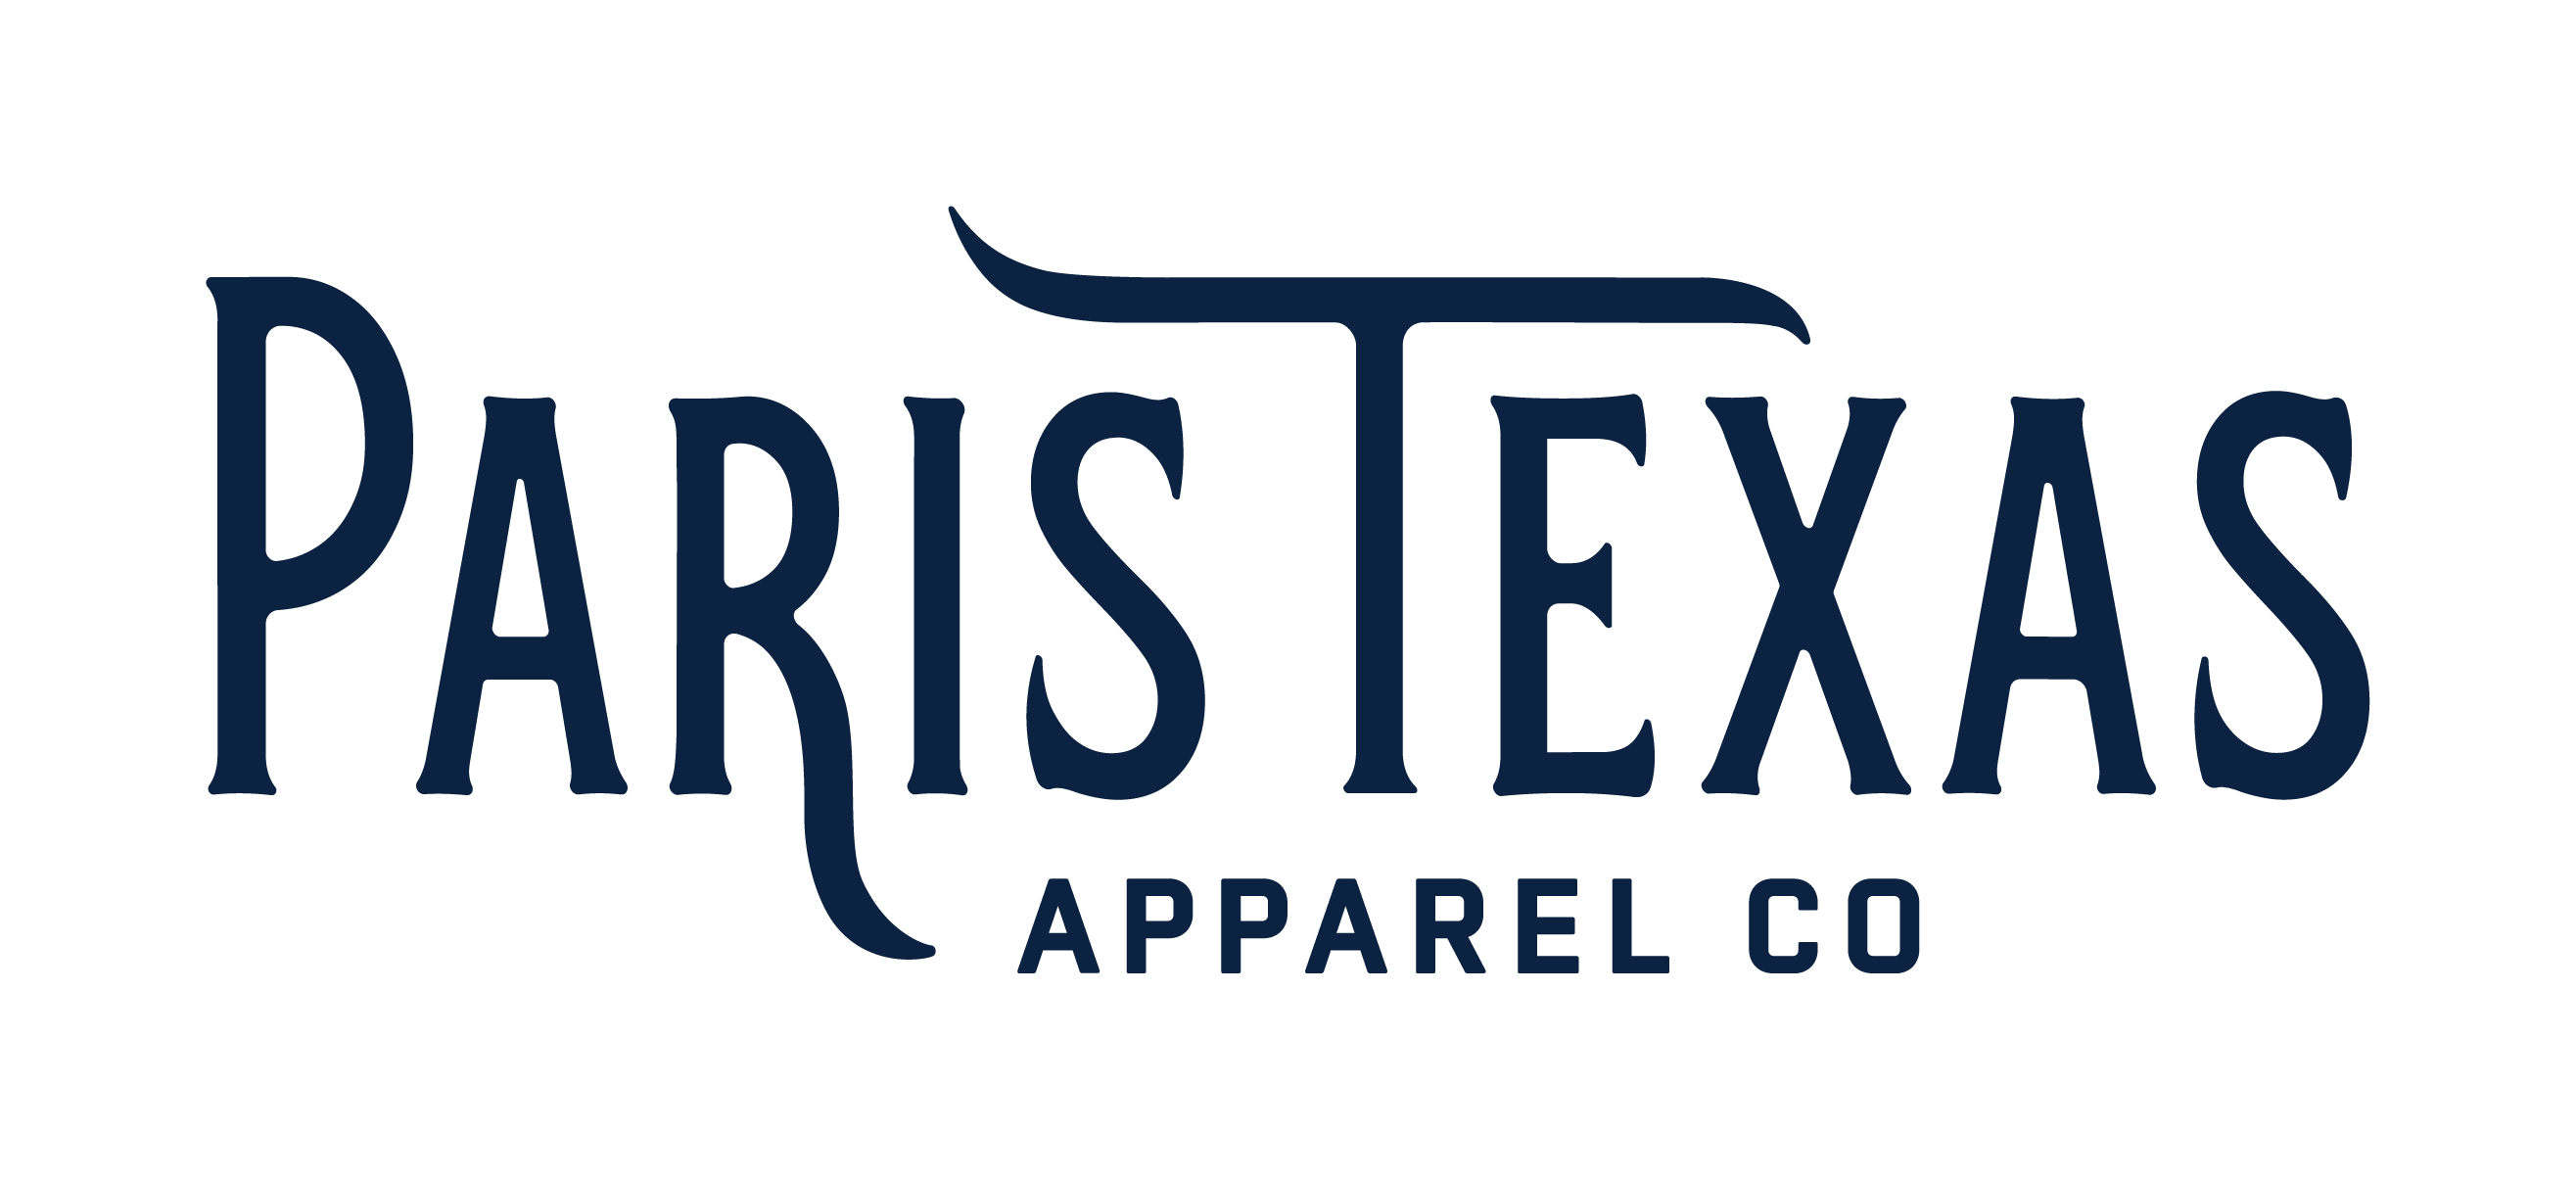 Paris Texas Apparel Co